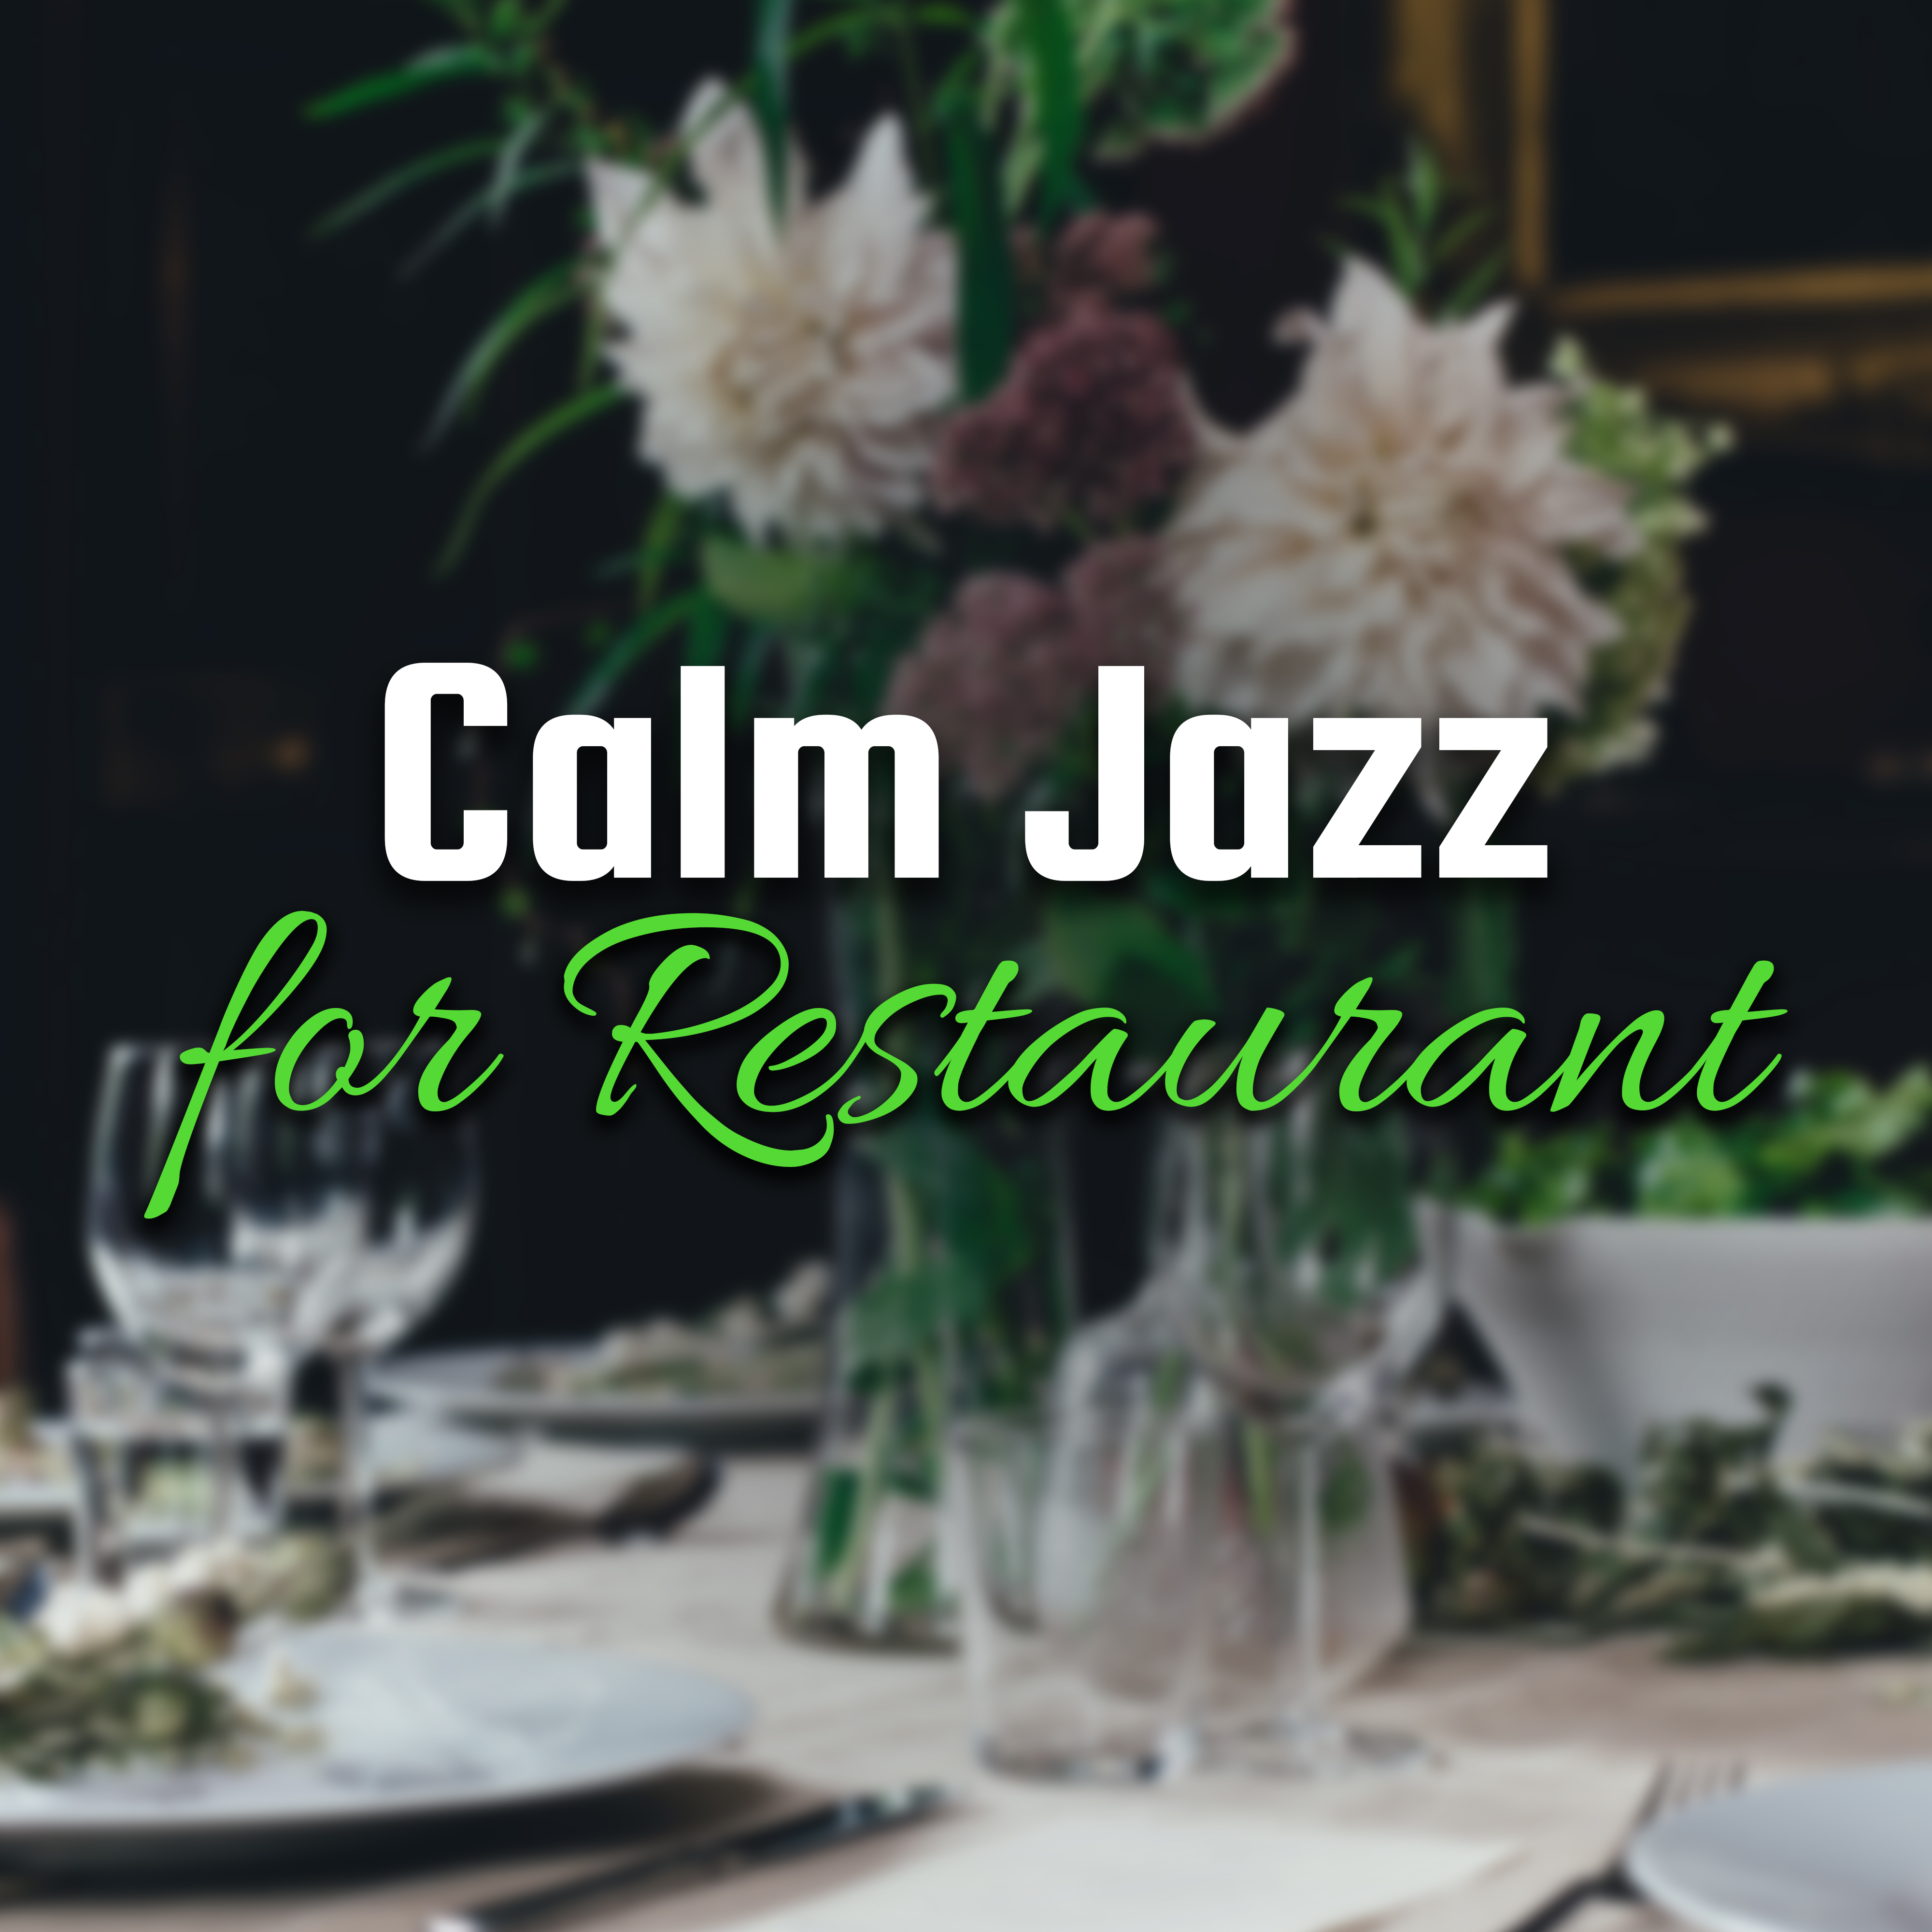 Calm Jazz for Restaurant  Easy Listening, Stress Relief, Peaceful Music, Family Dinner, Background Music